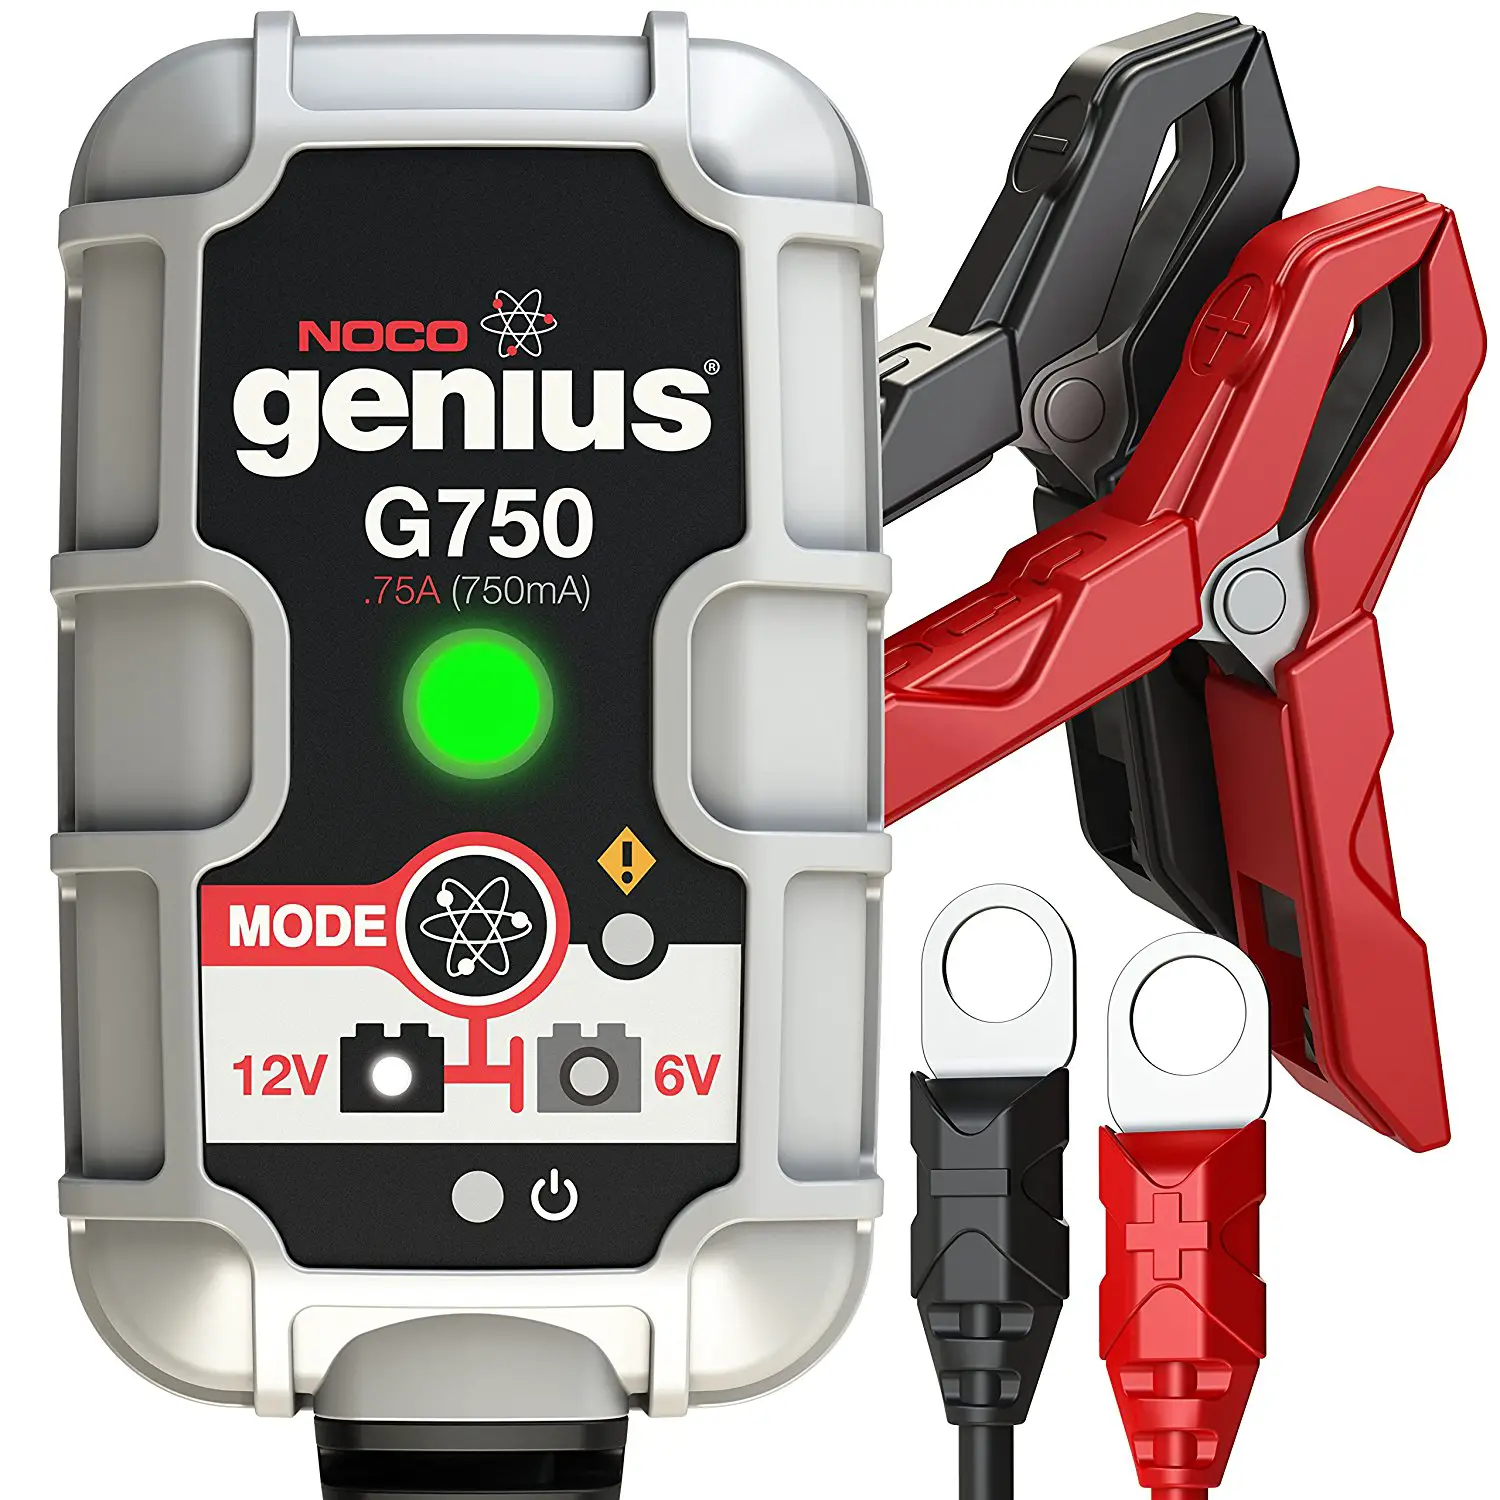 2. Noco Genius G750